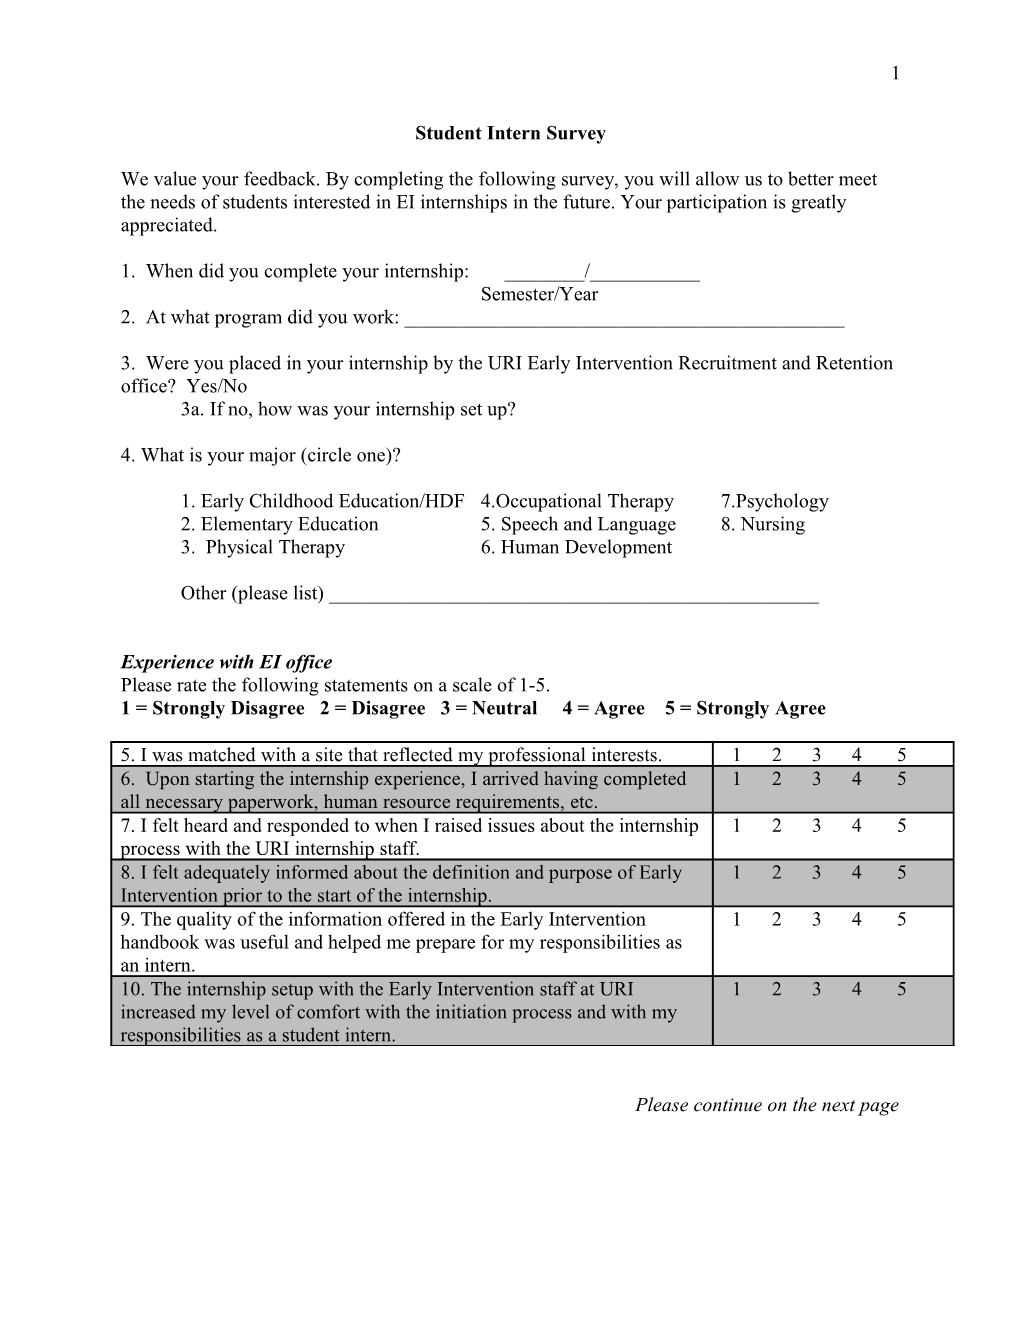 Student Intern Survey